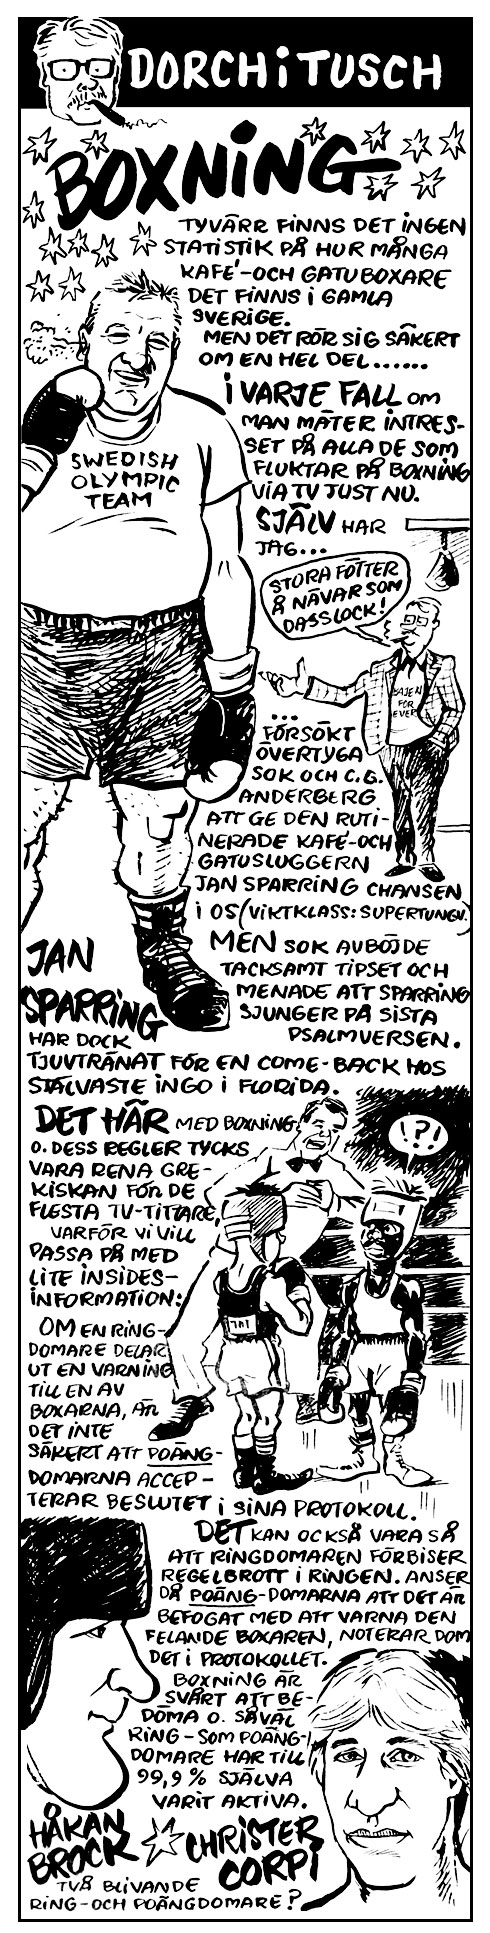 Jan Sparring